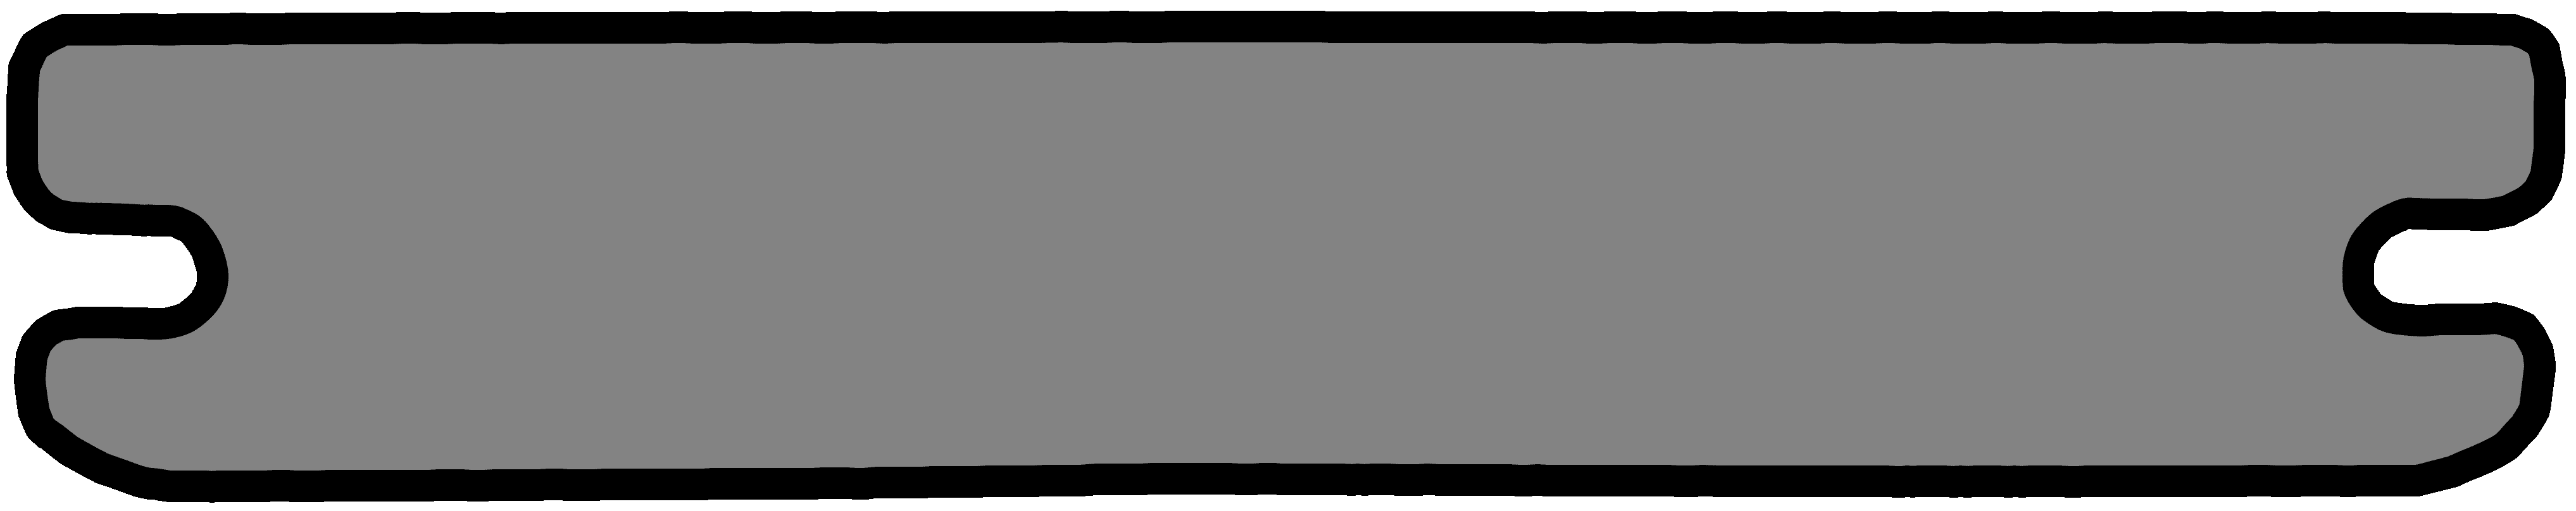 Image of a Fiberon PVC Grooved Board Side Profile